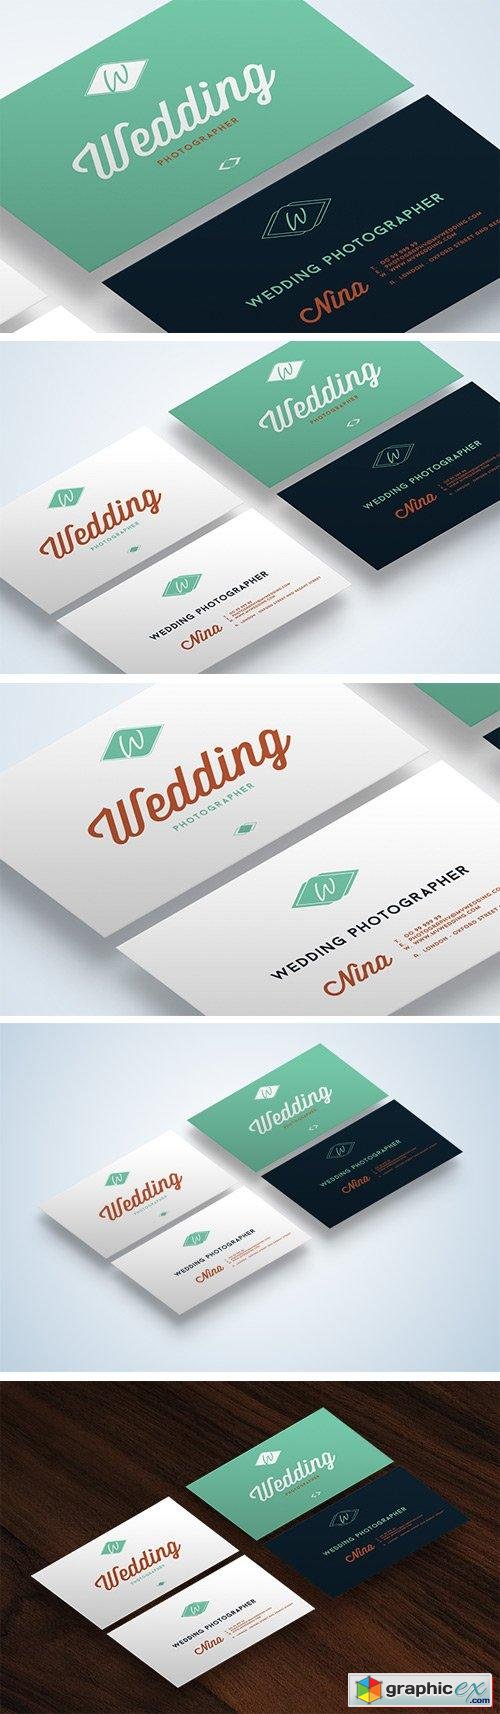 Wedding Business Cards Mock-Up